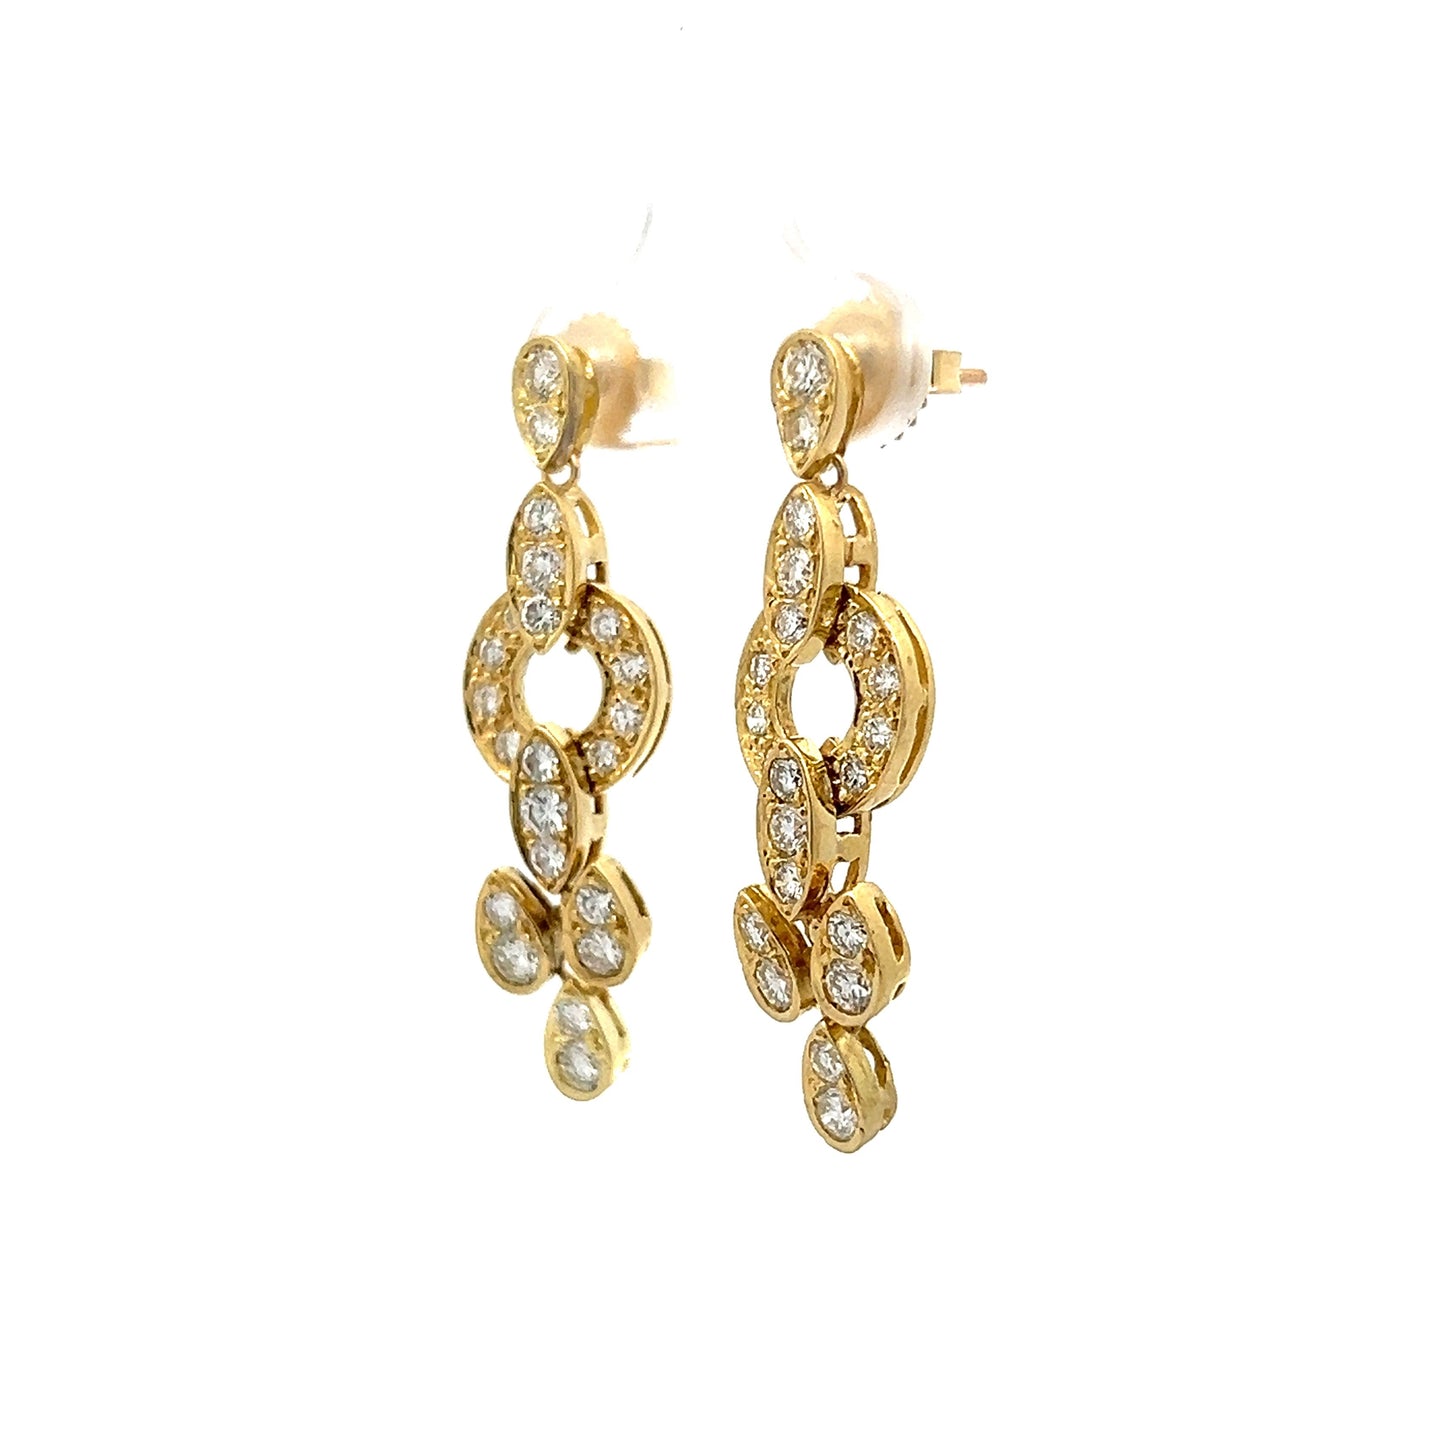 1.92 Diamond Drop Earrings in 14k Yellow Gold